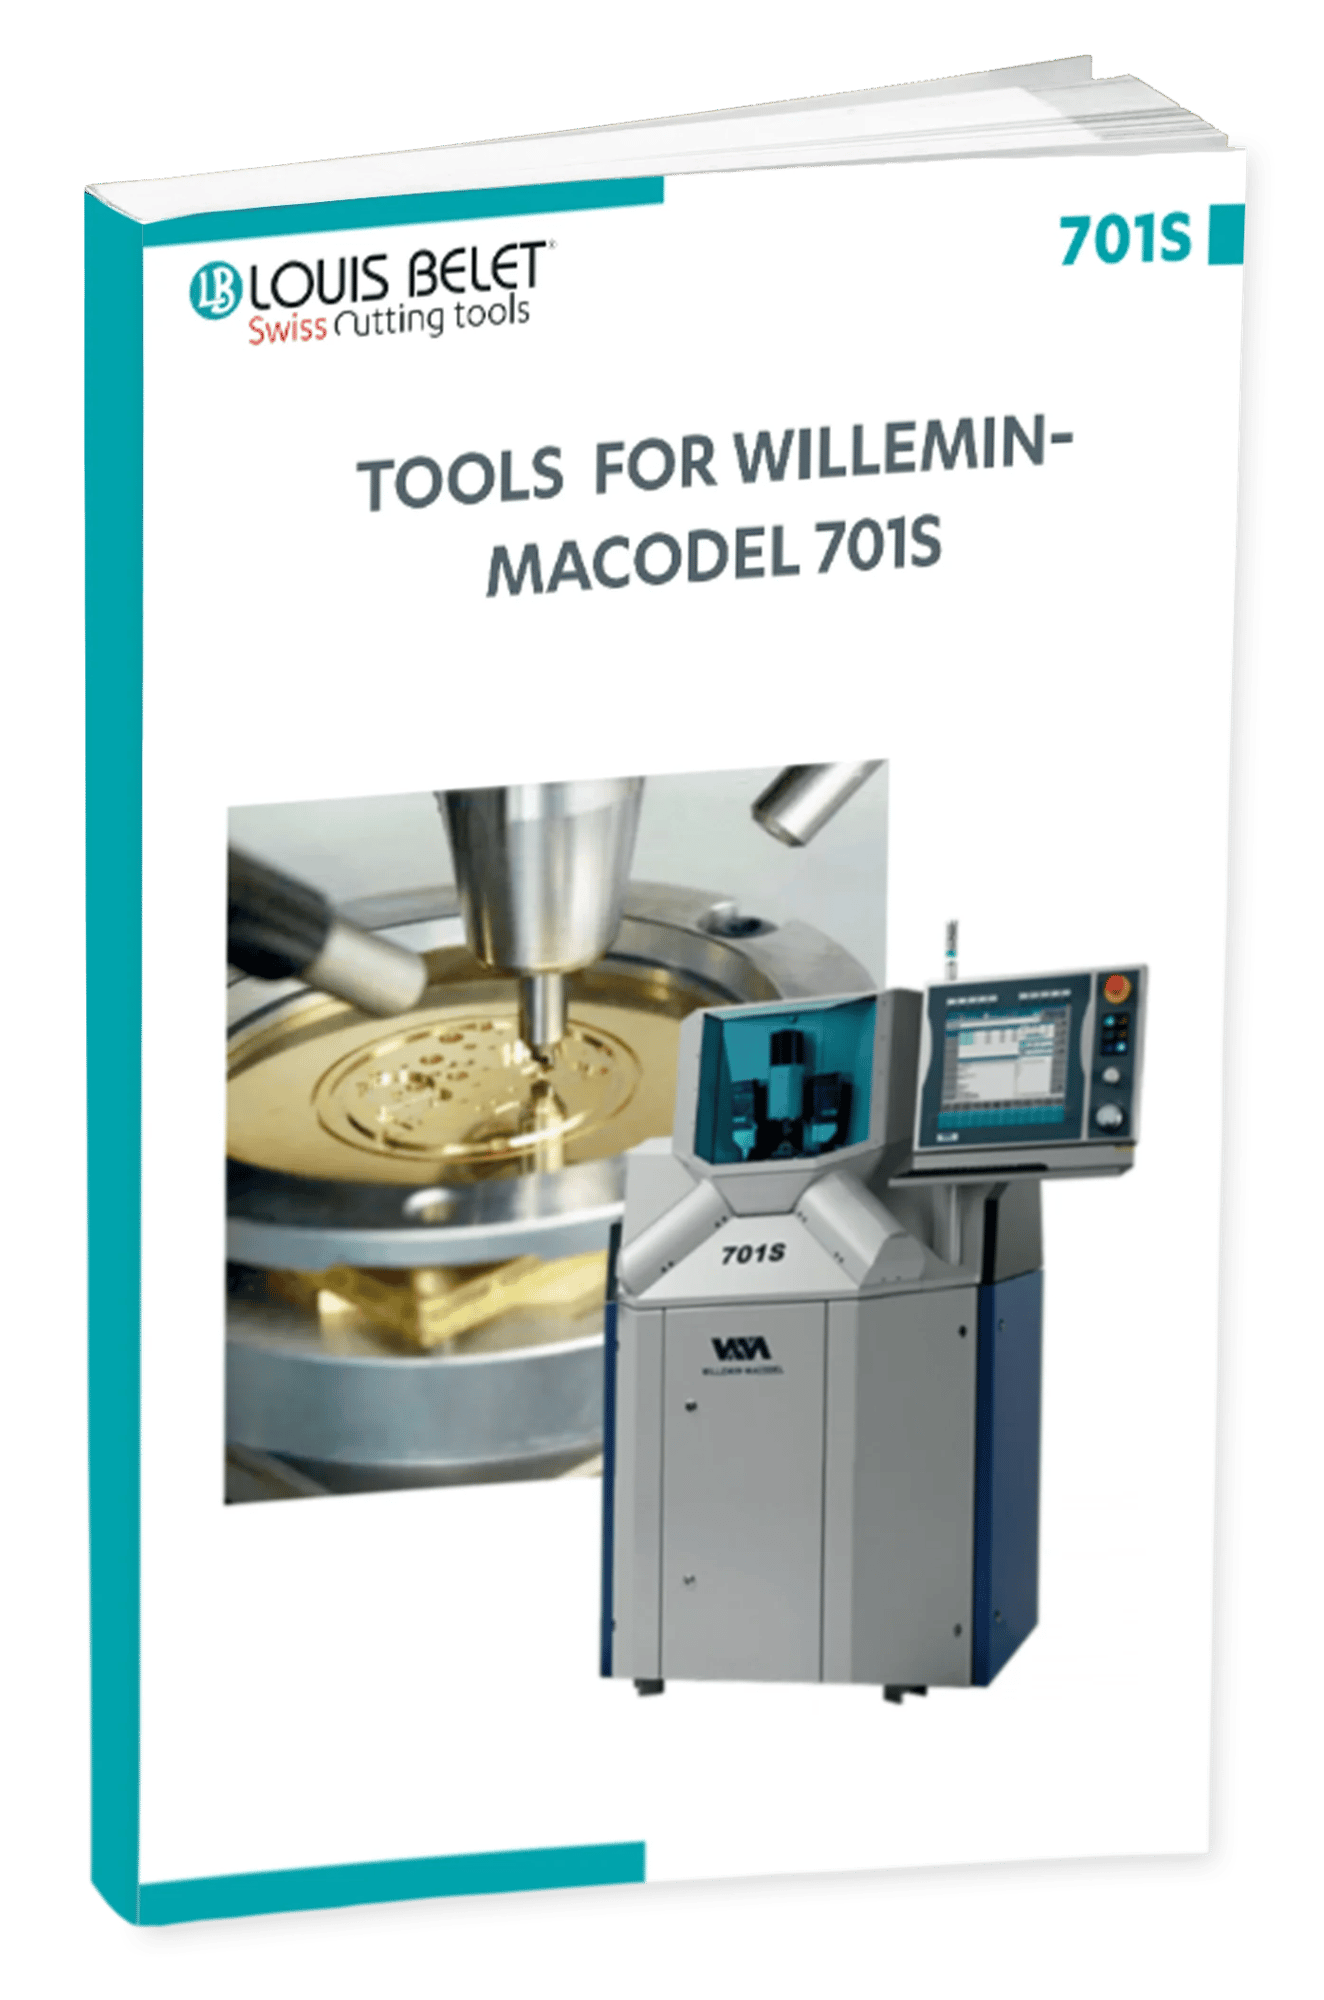 12. Louis Belet Tools for Machine 701S (Willemin-Macodel)